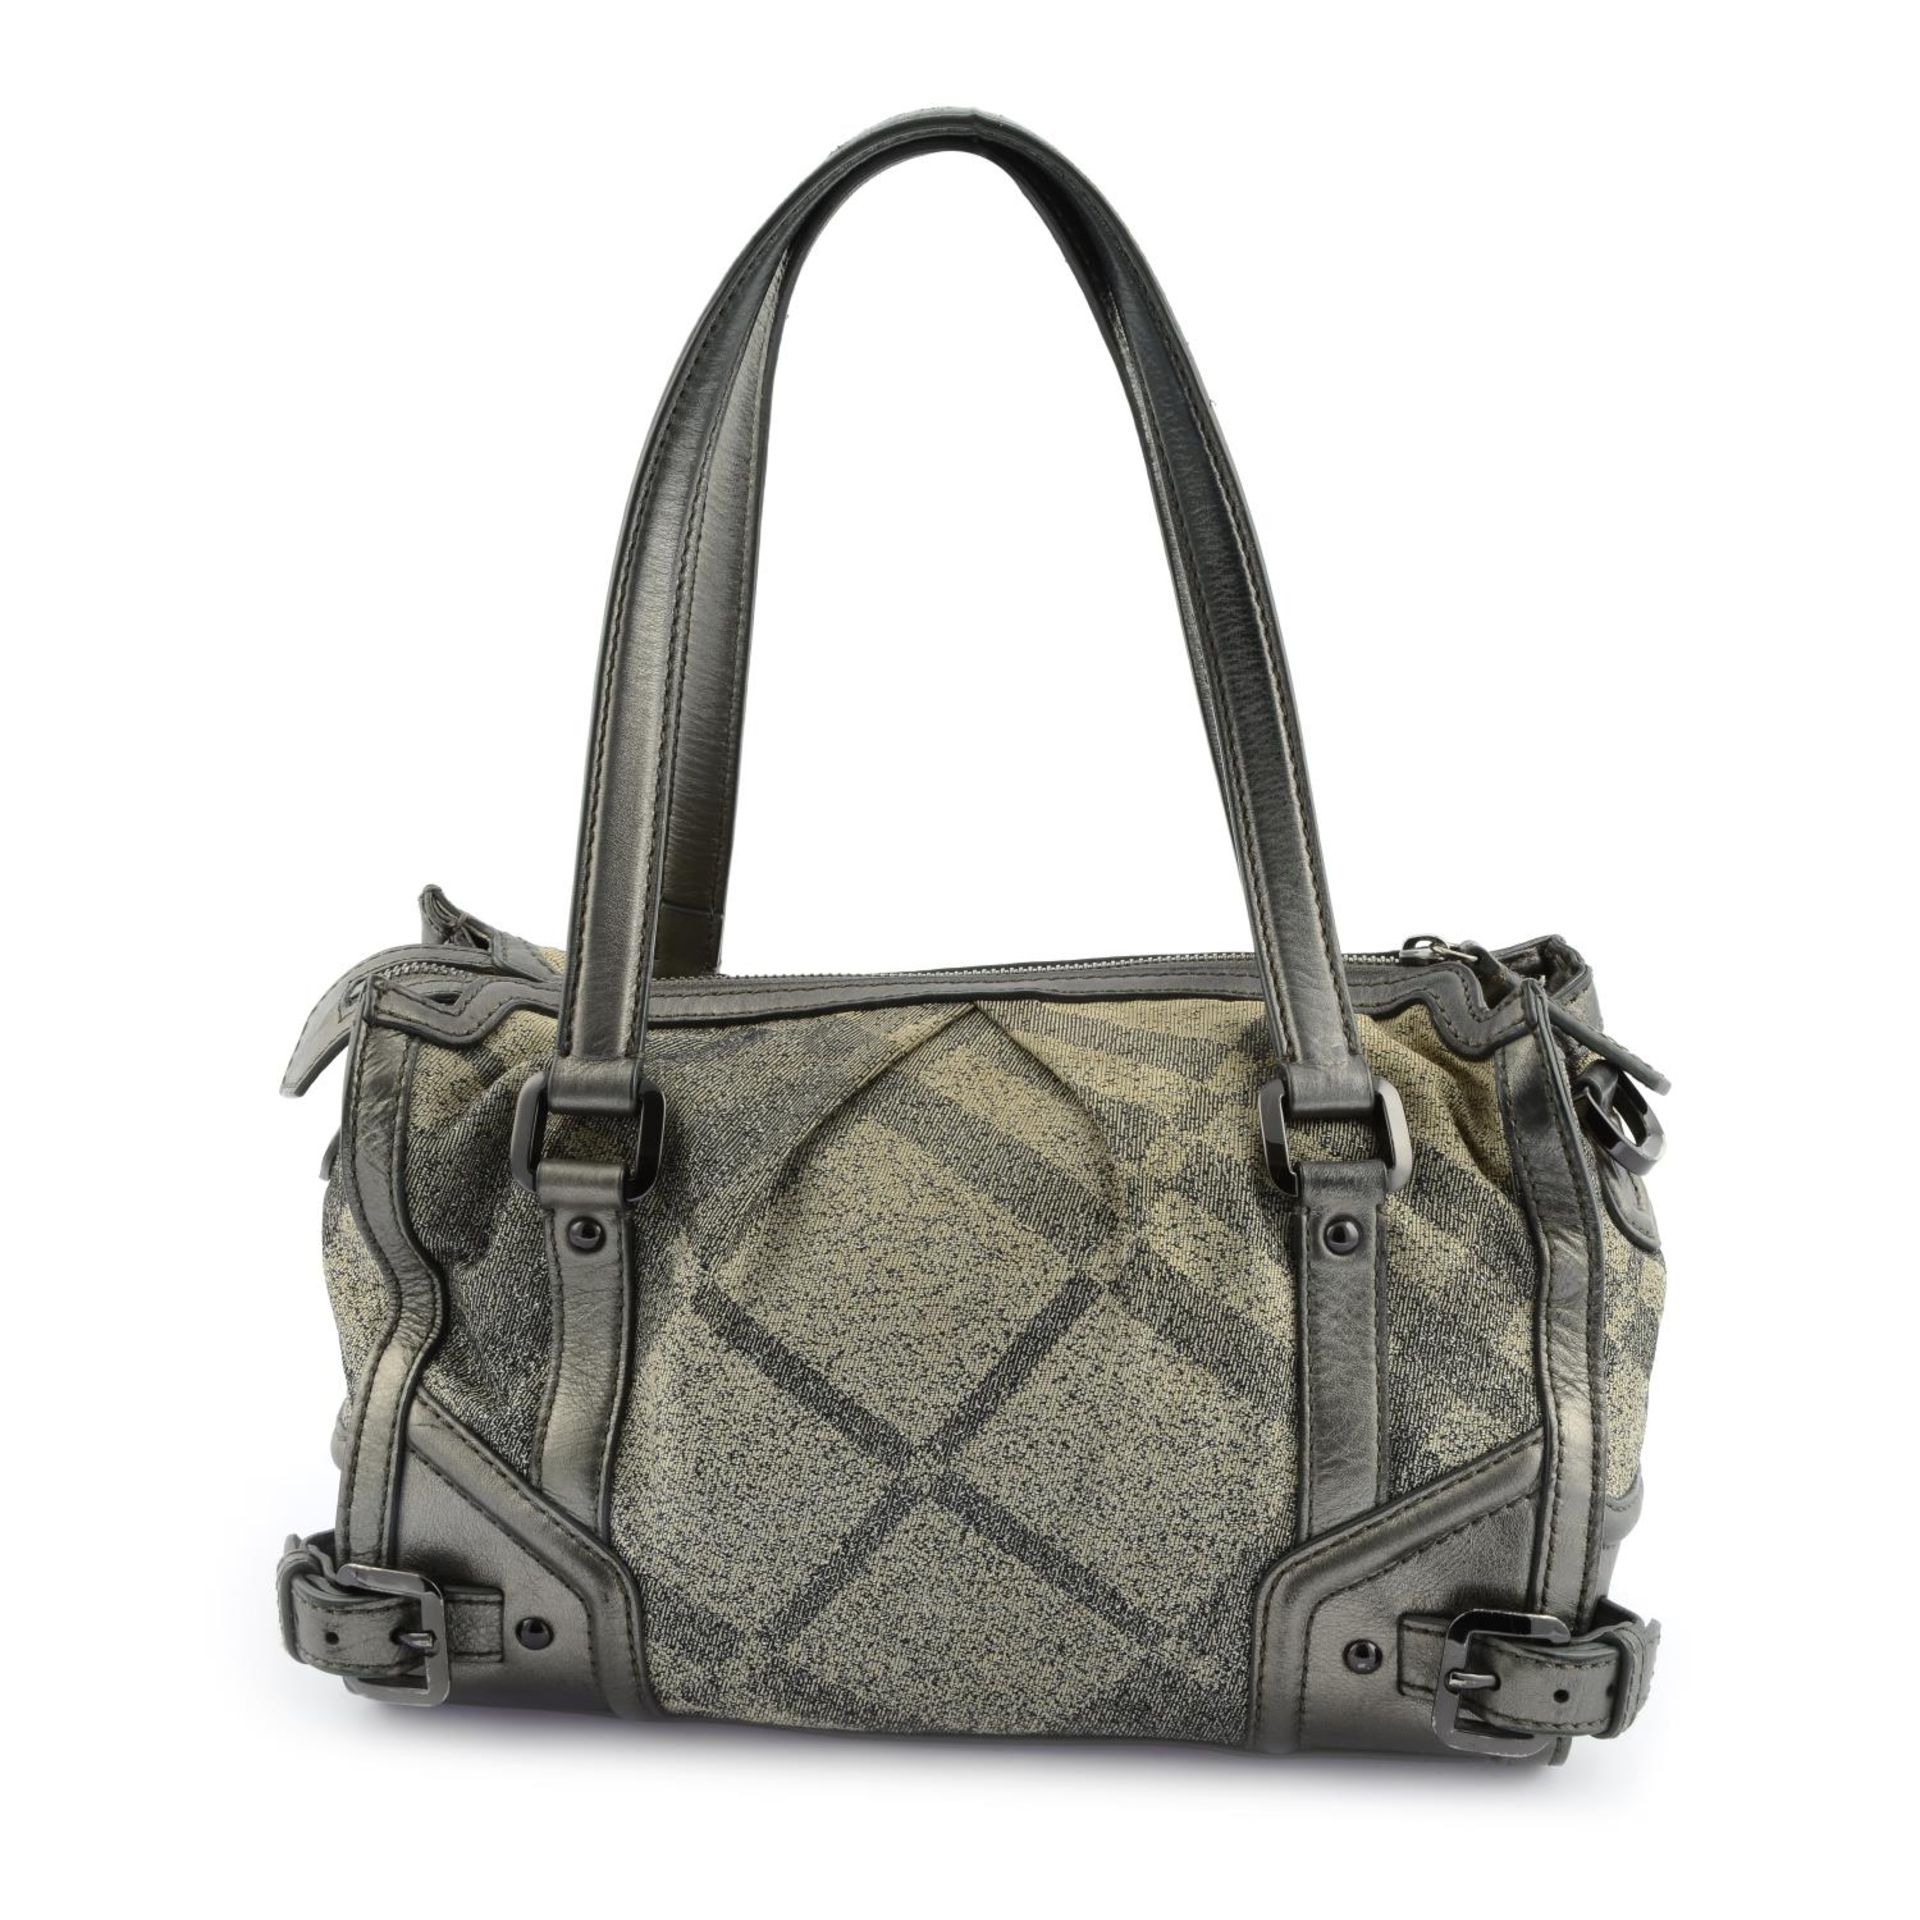 BURBERRY - a metallic canvas handbag.